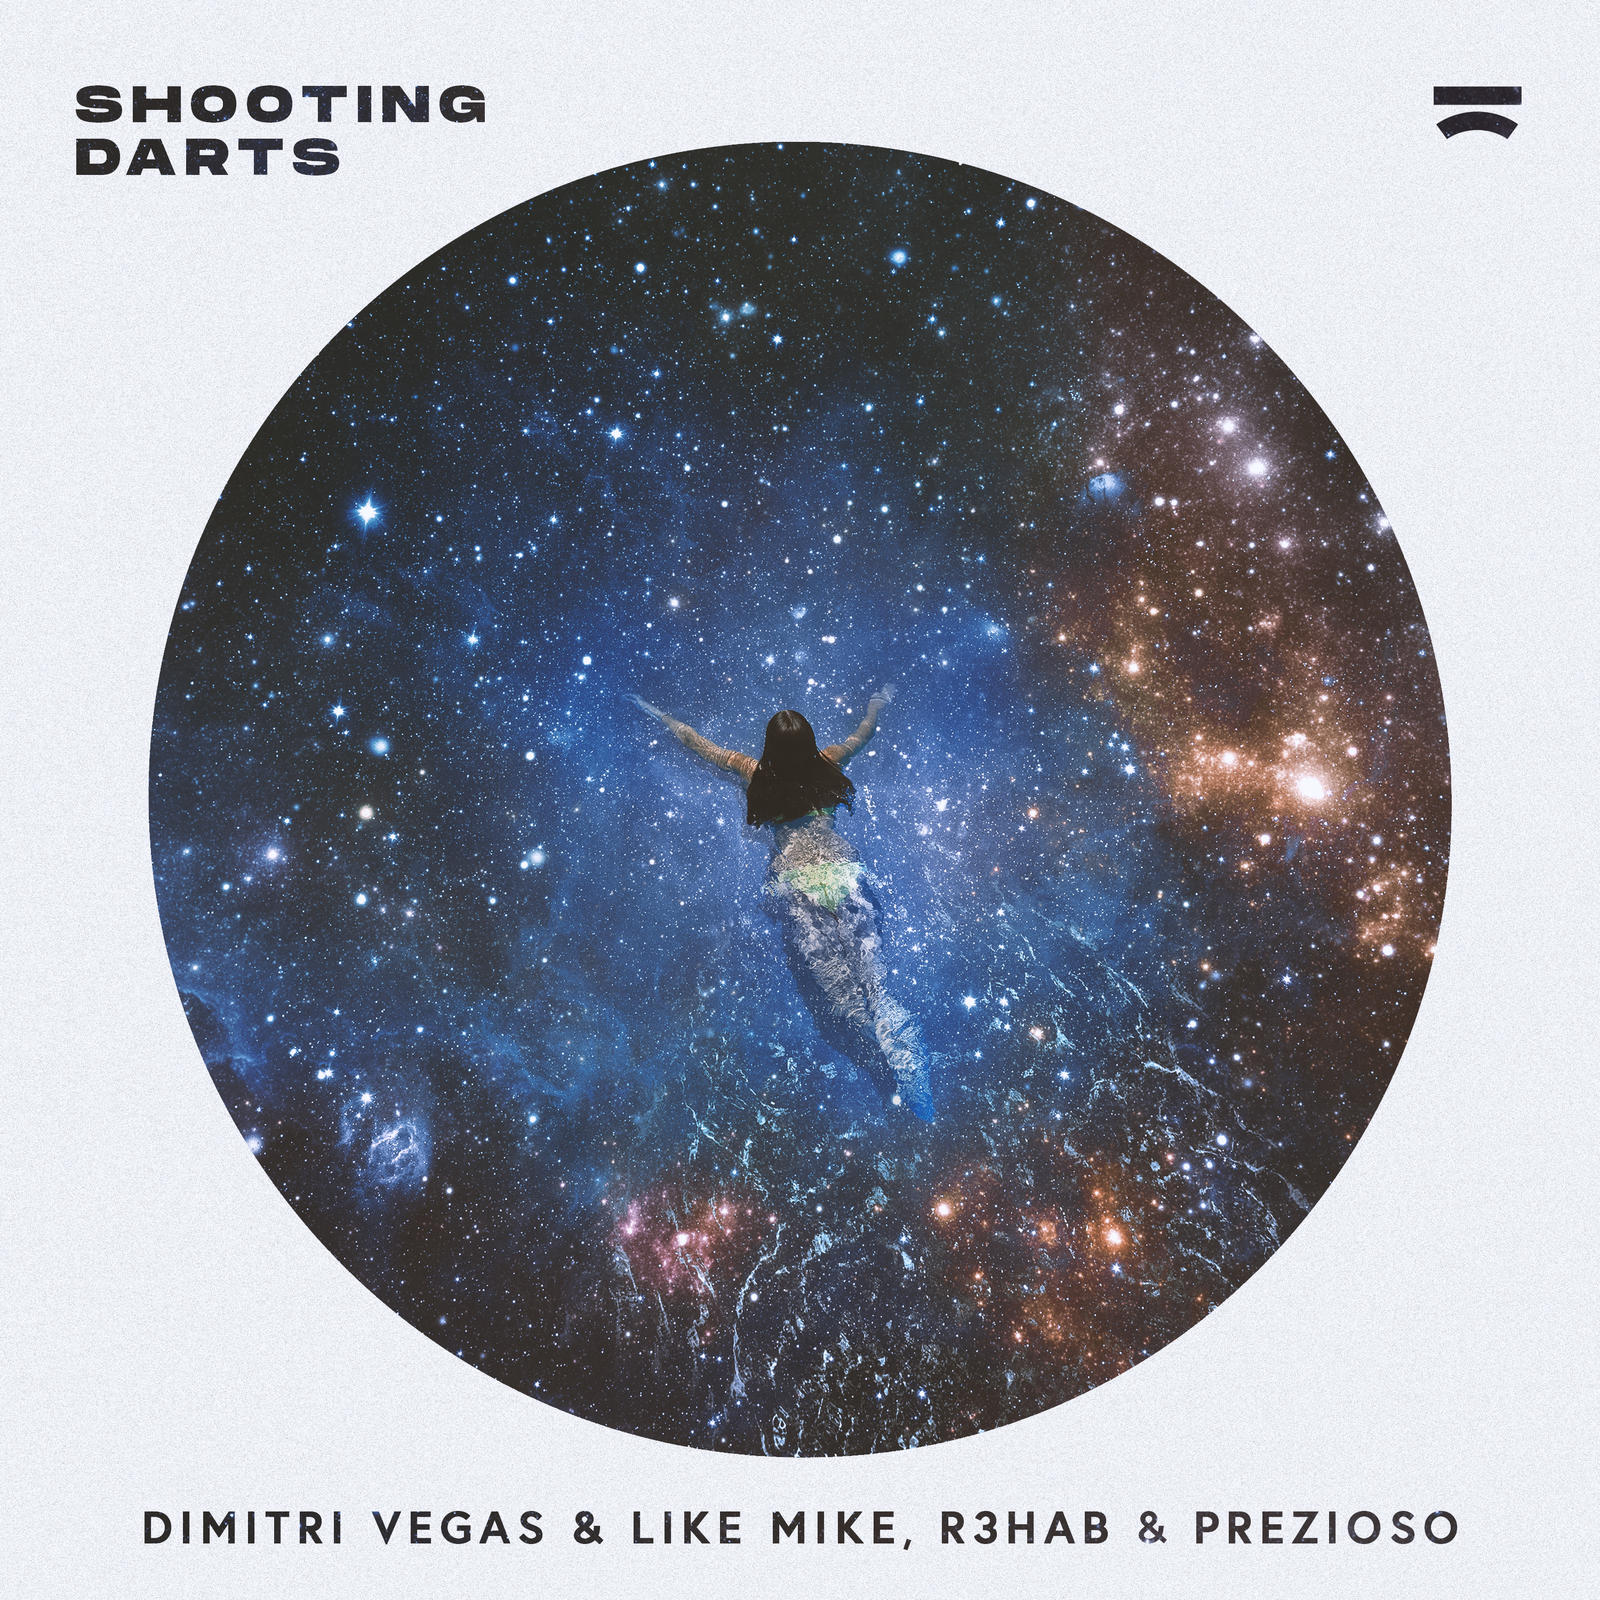 Dimitri Vegas &amp; Like Mike, R3HAB, & Prezioso Shooting Darts cover artwork